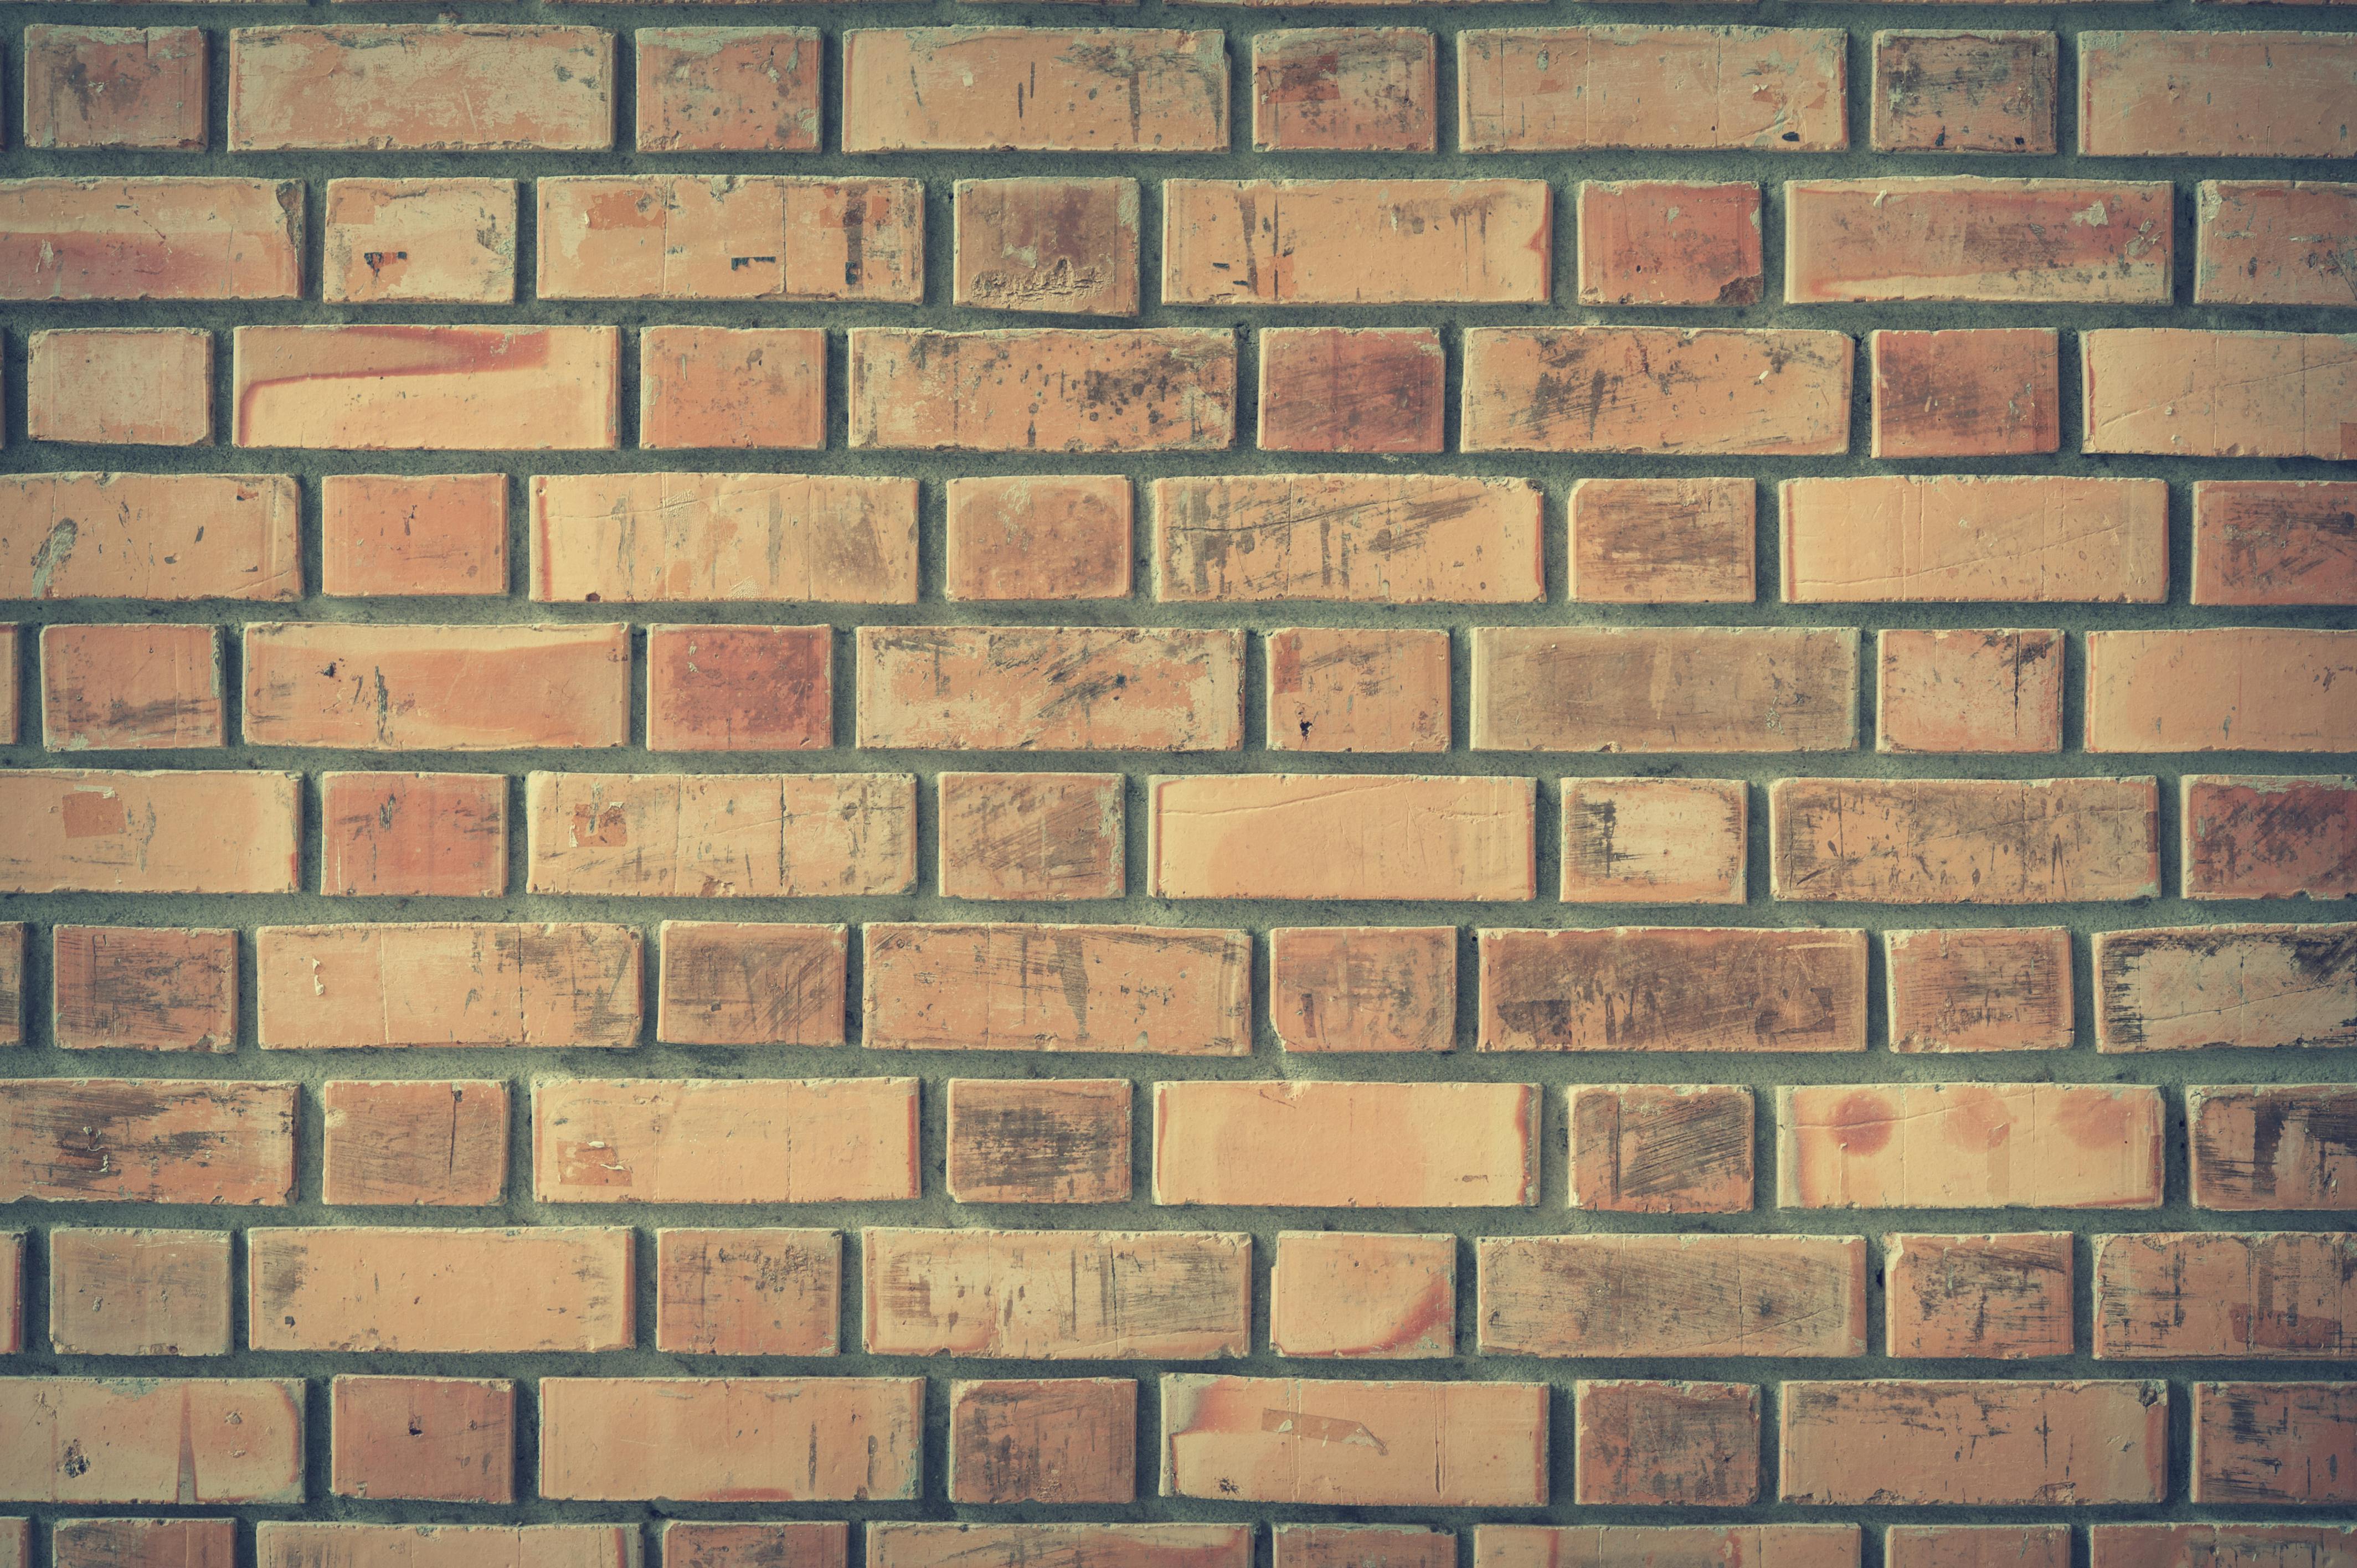 Bricks Photos, Download The BEST Free Bricks Stock Photos & HD Images